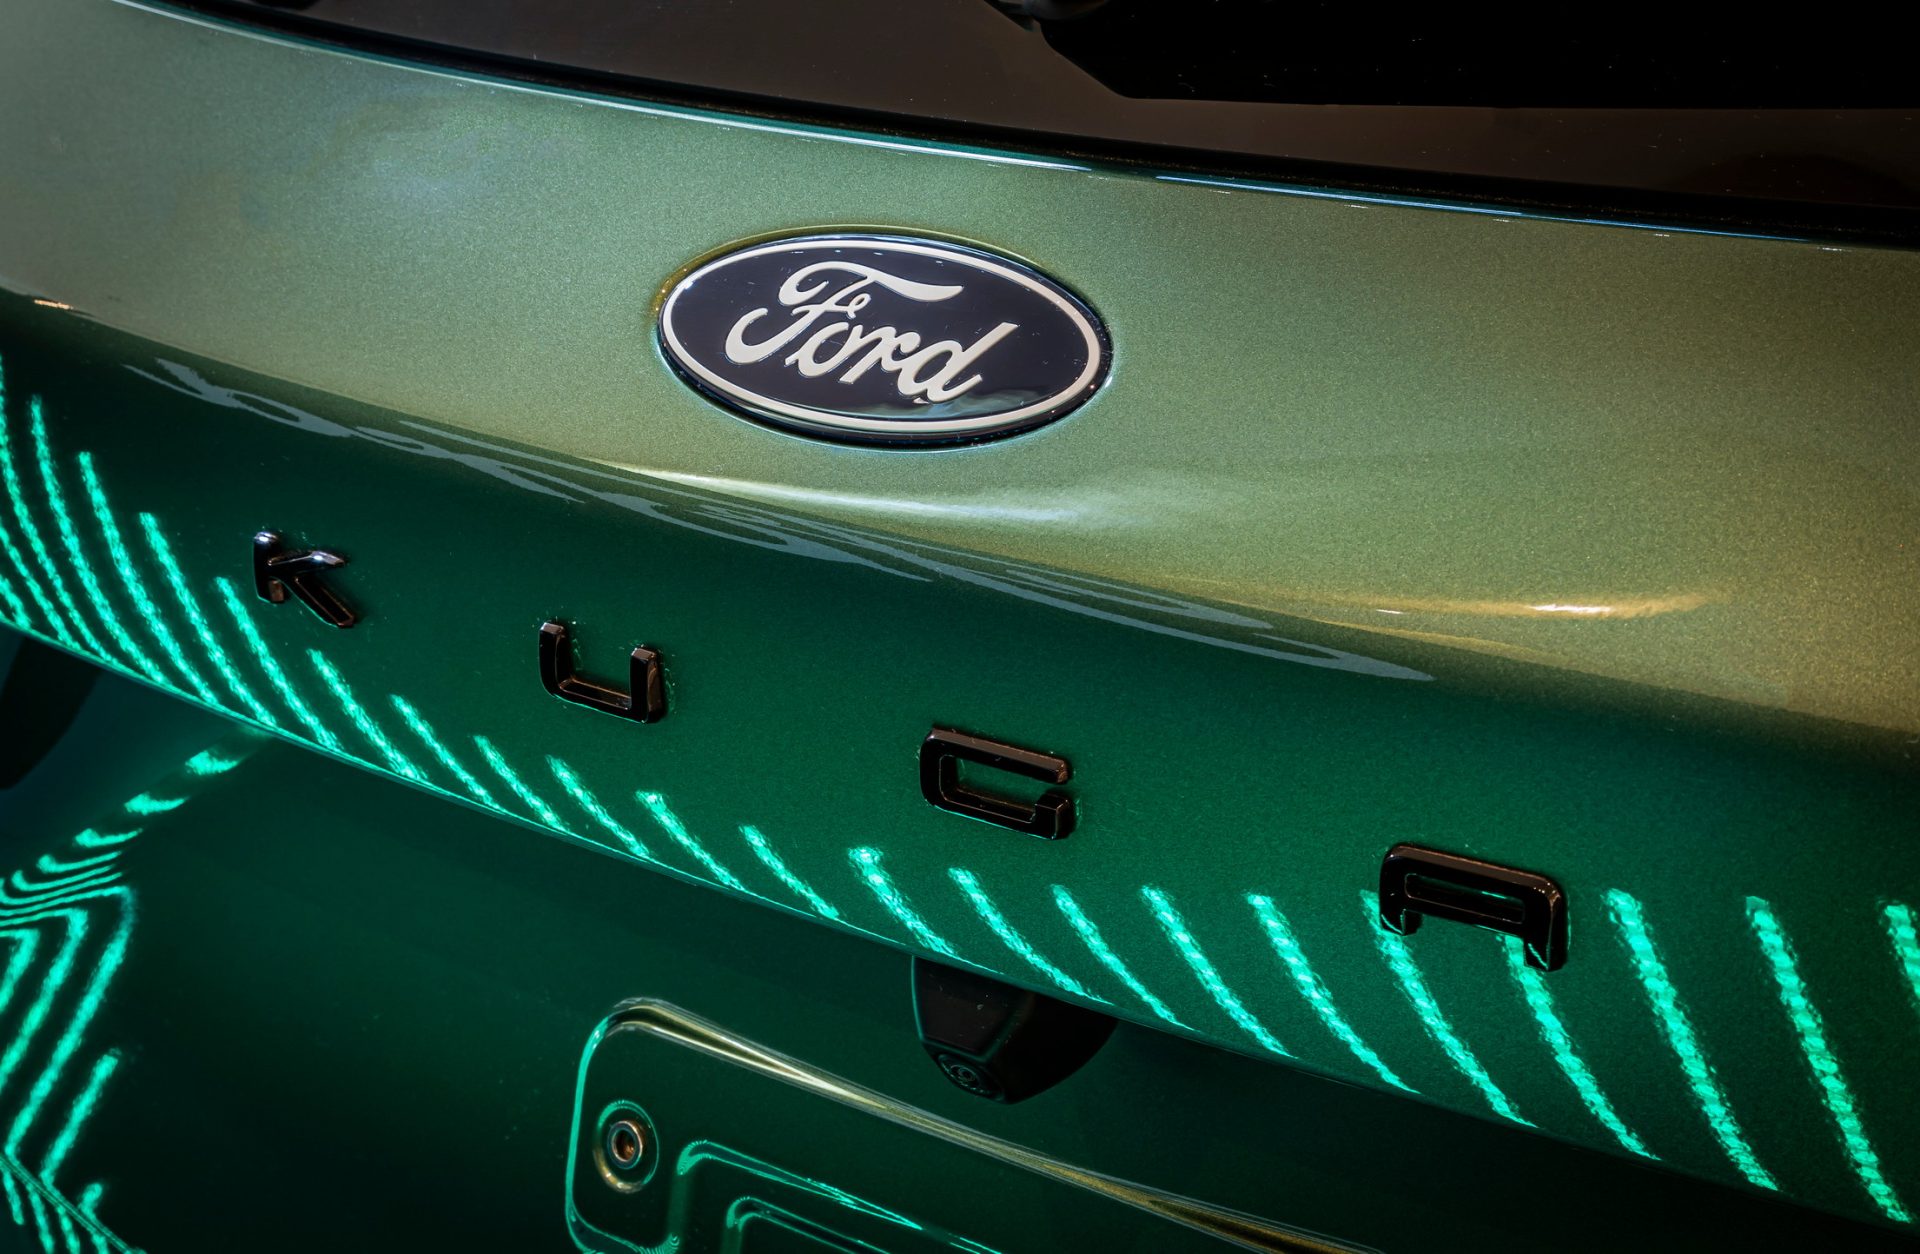 FORD KUGA 05 Δείτε το νέο Ford Kuga στο πολυτελές stage της Ford στο Golden Hall και κλείστε ένα Test Drive